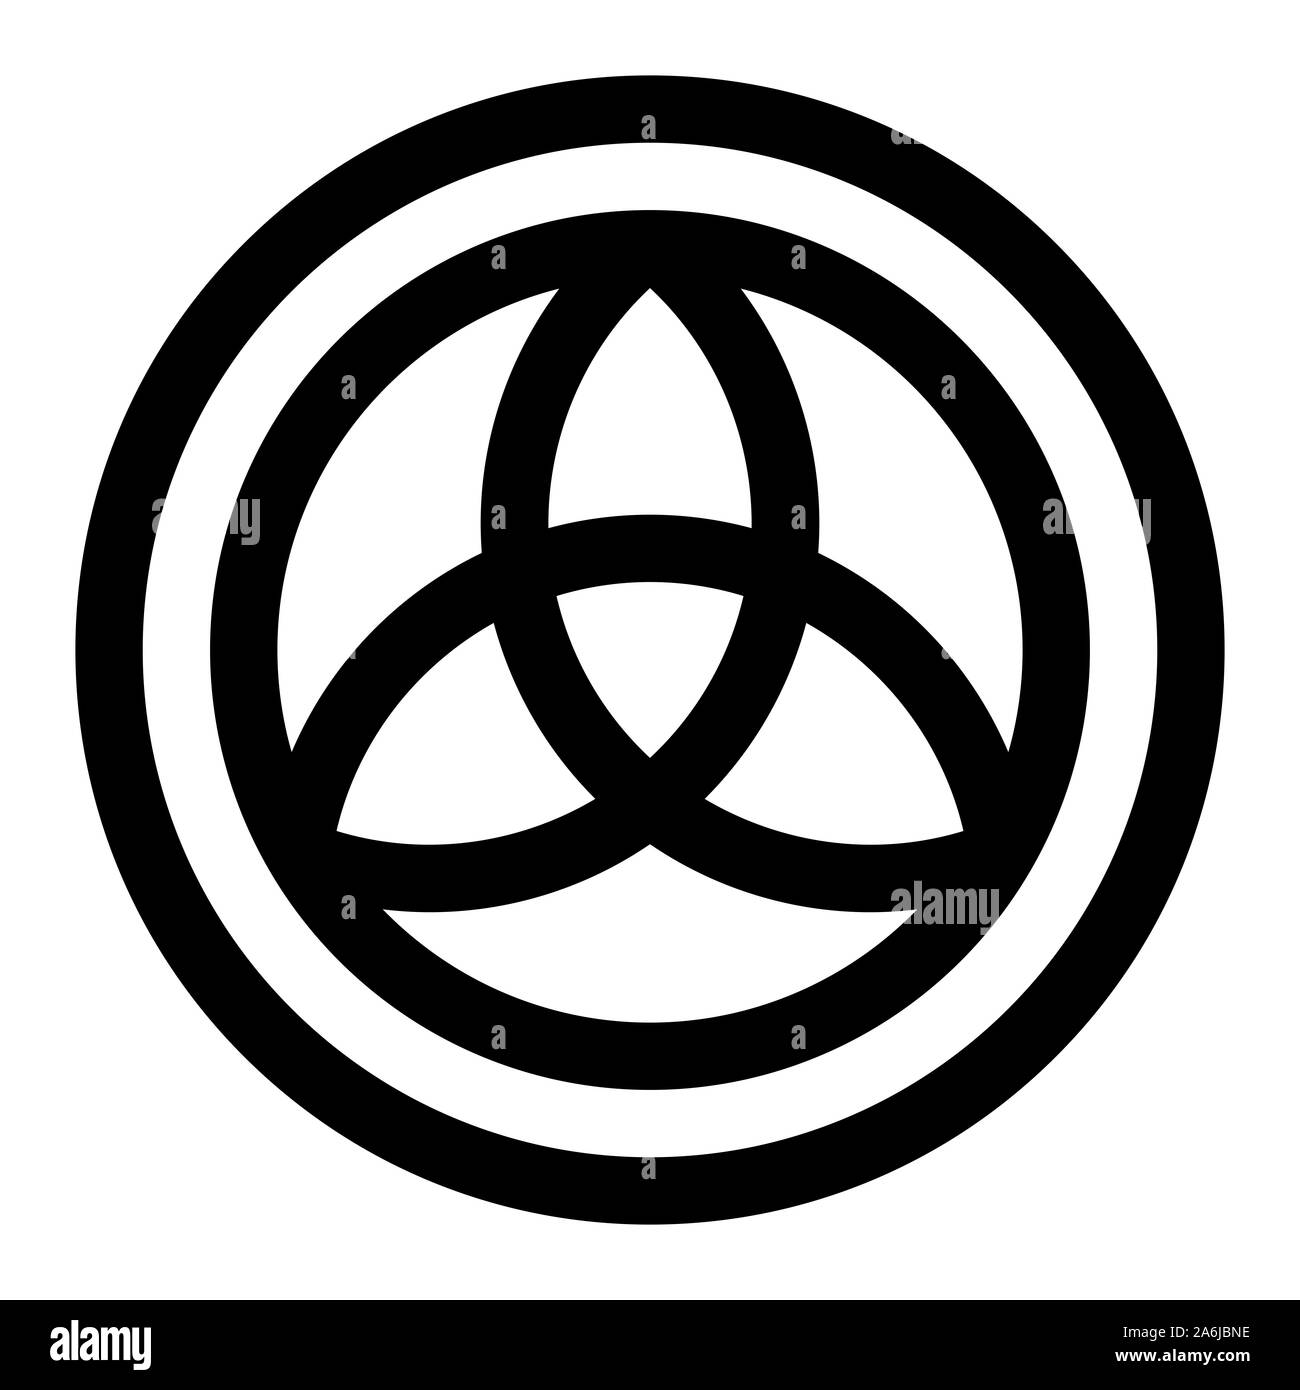 Triquetra symbol in a circle Stock Photo